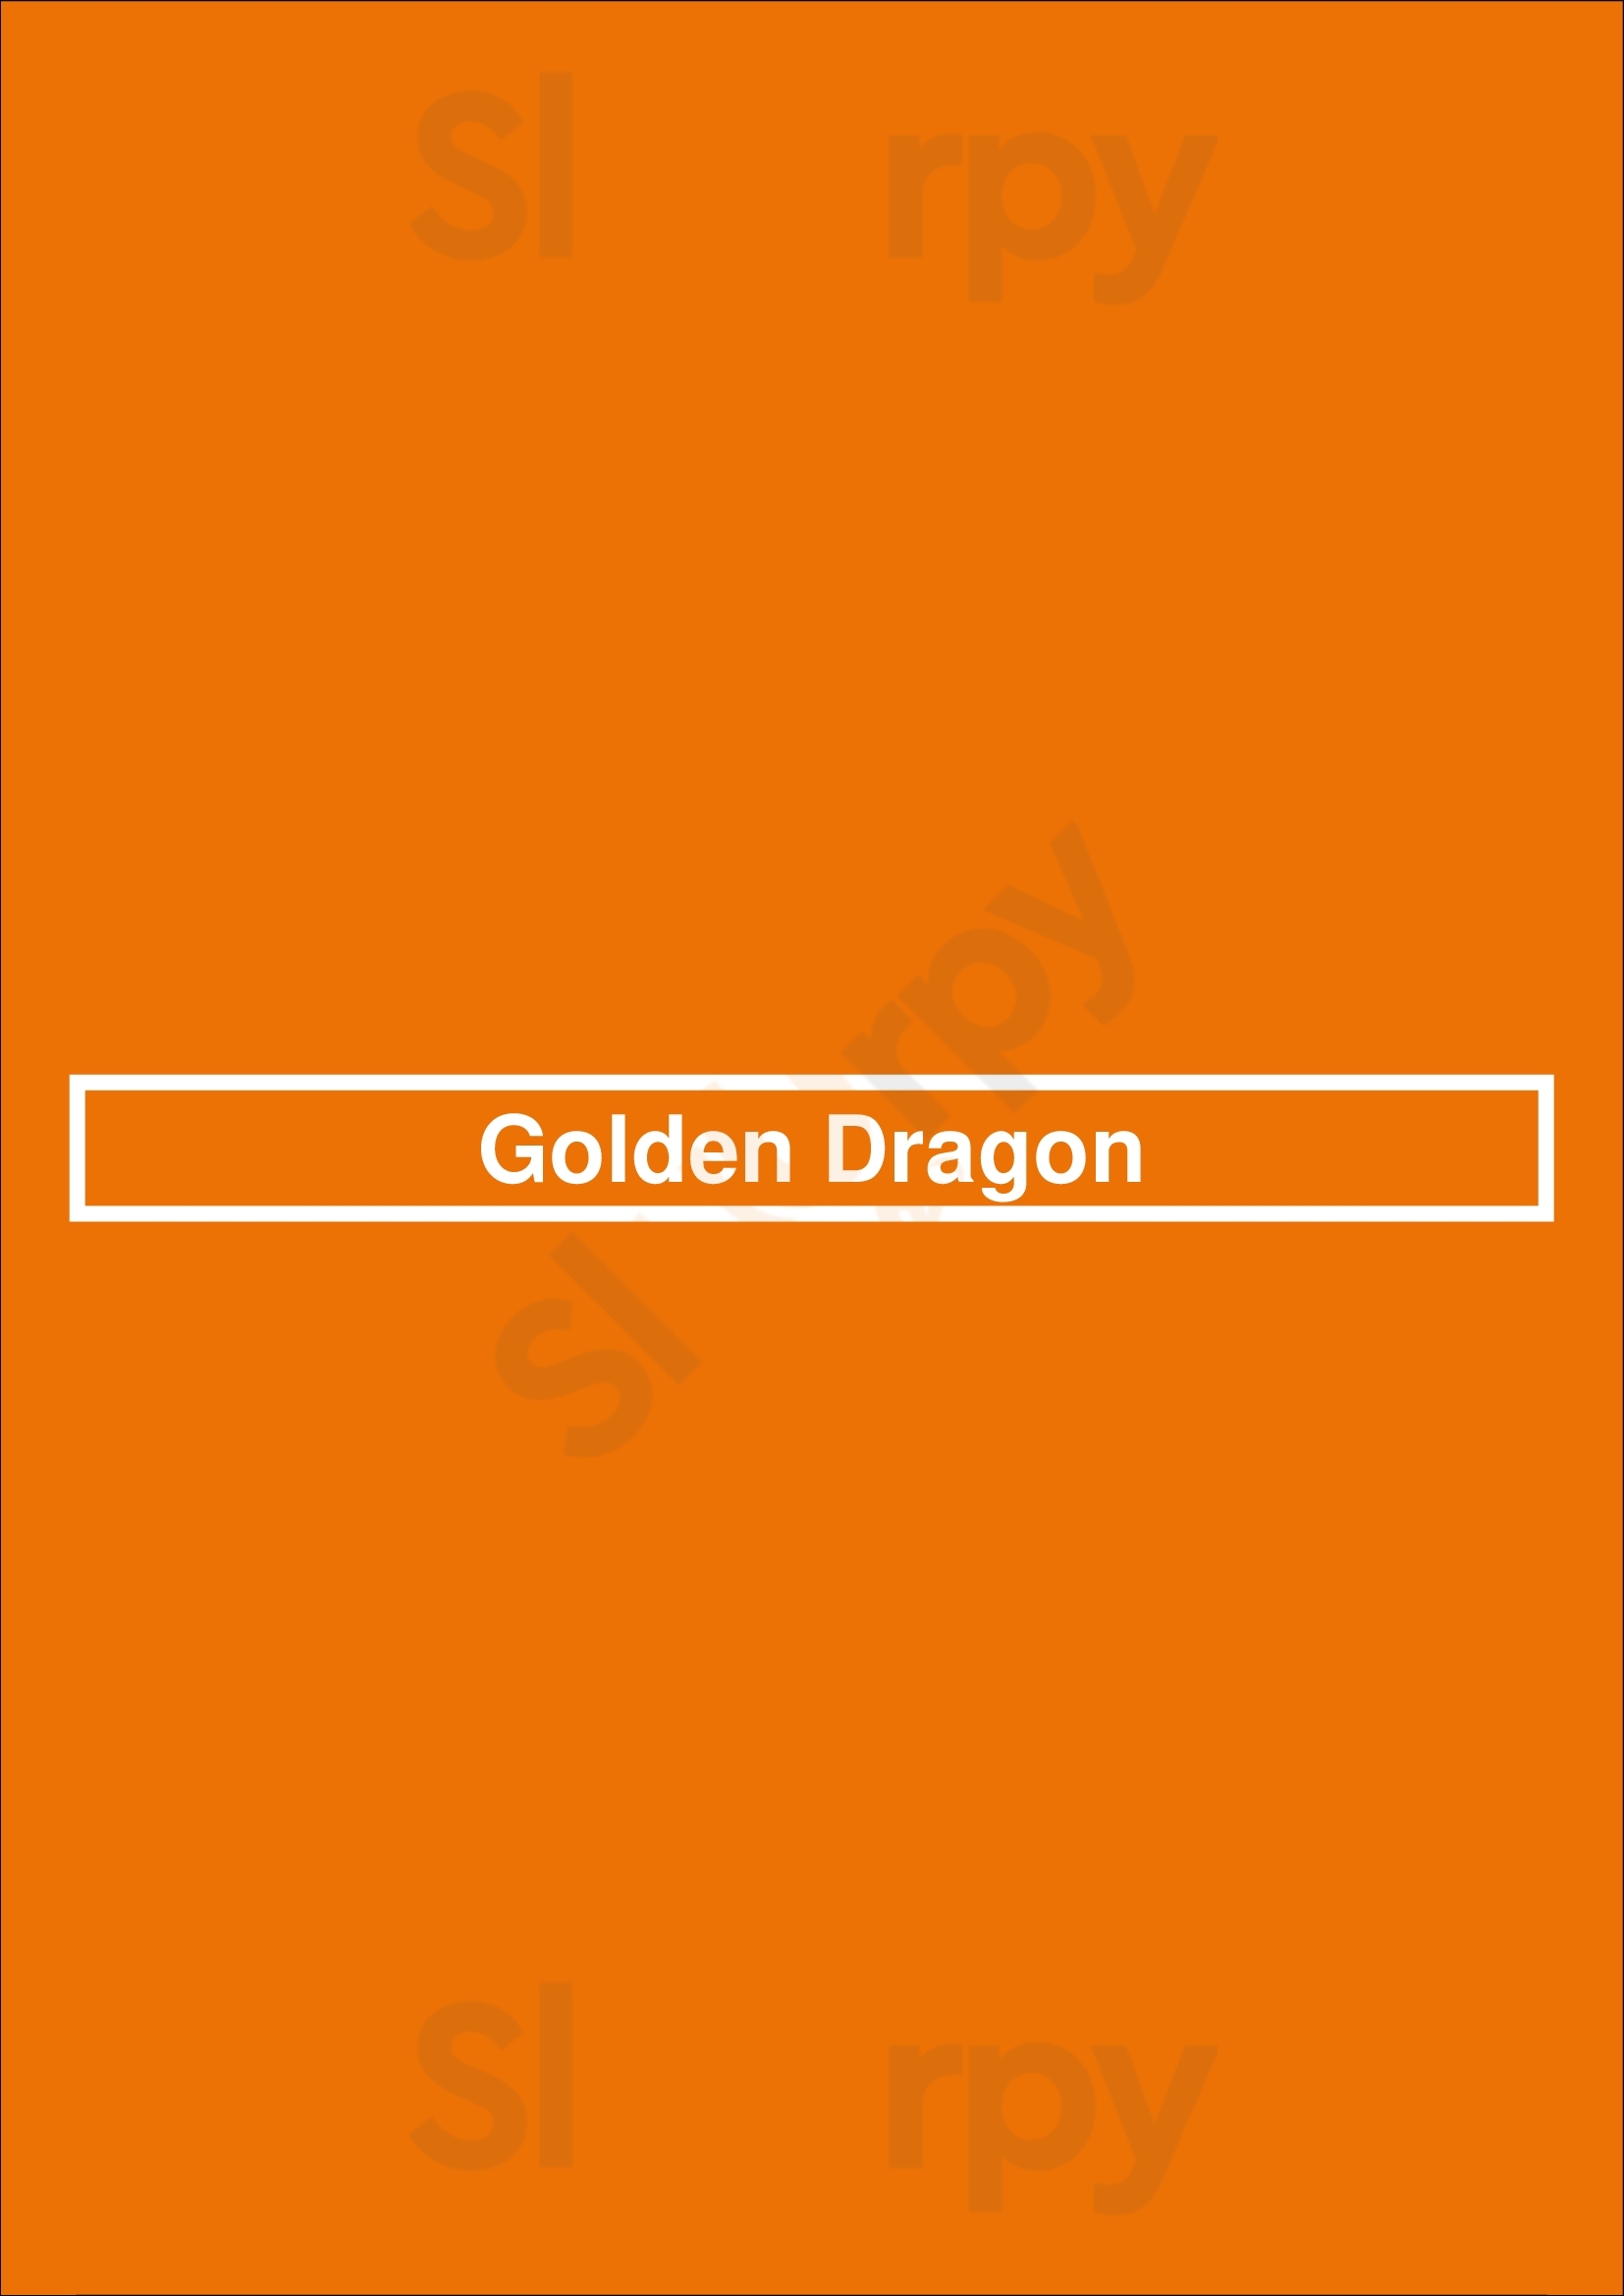 Golden Dragon Tucson Menu - 1